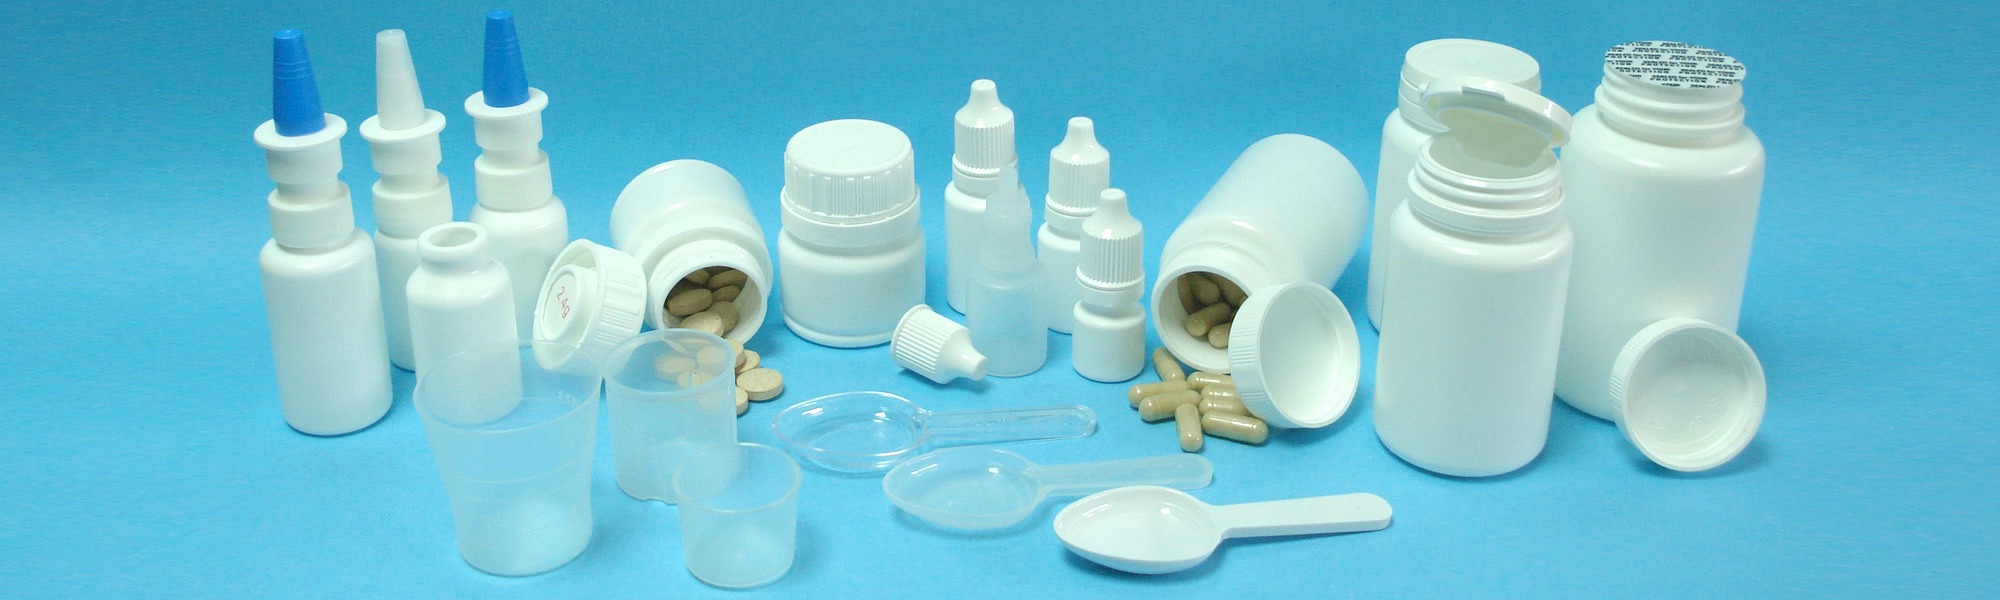 PlasticProgress Products